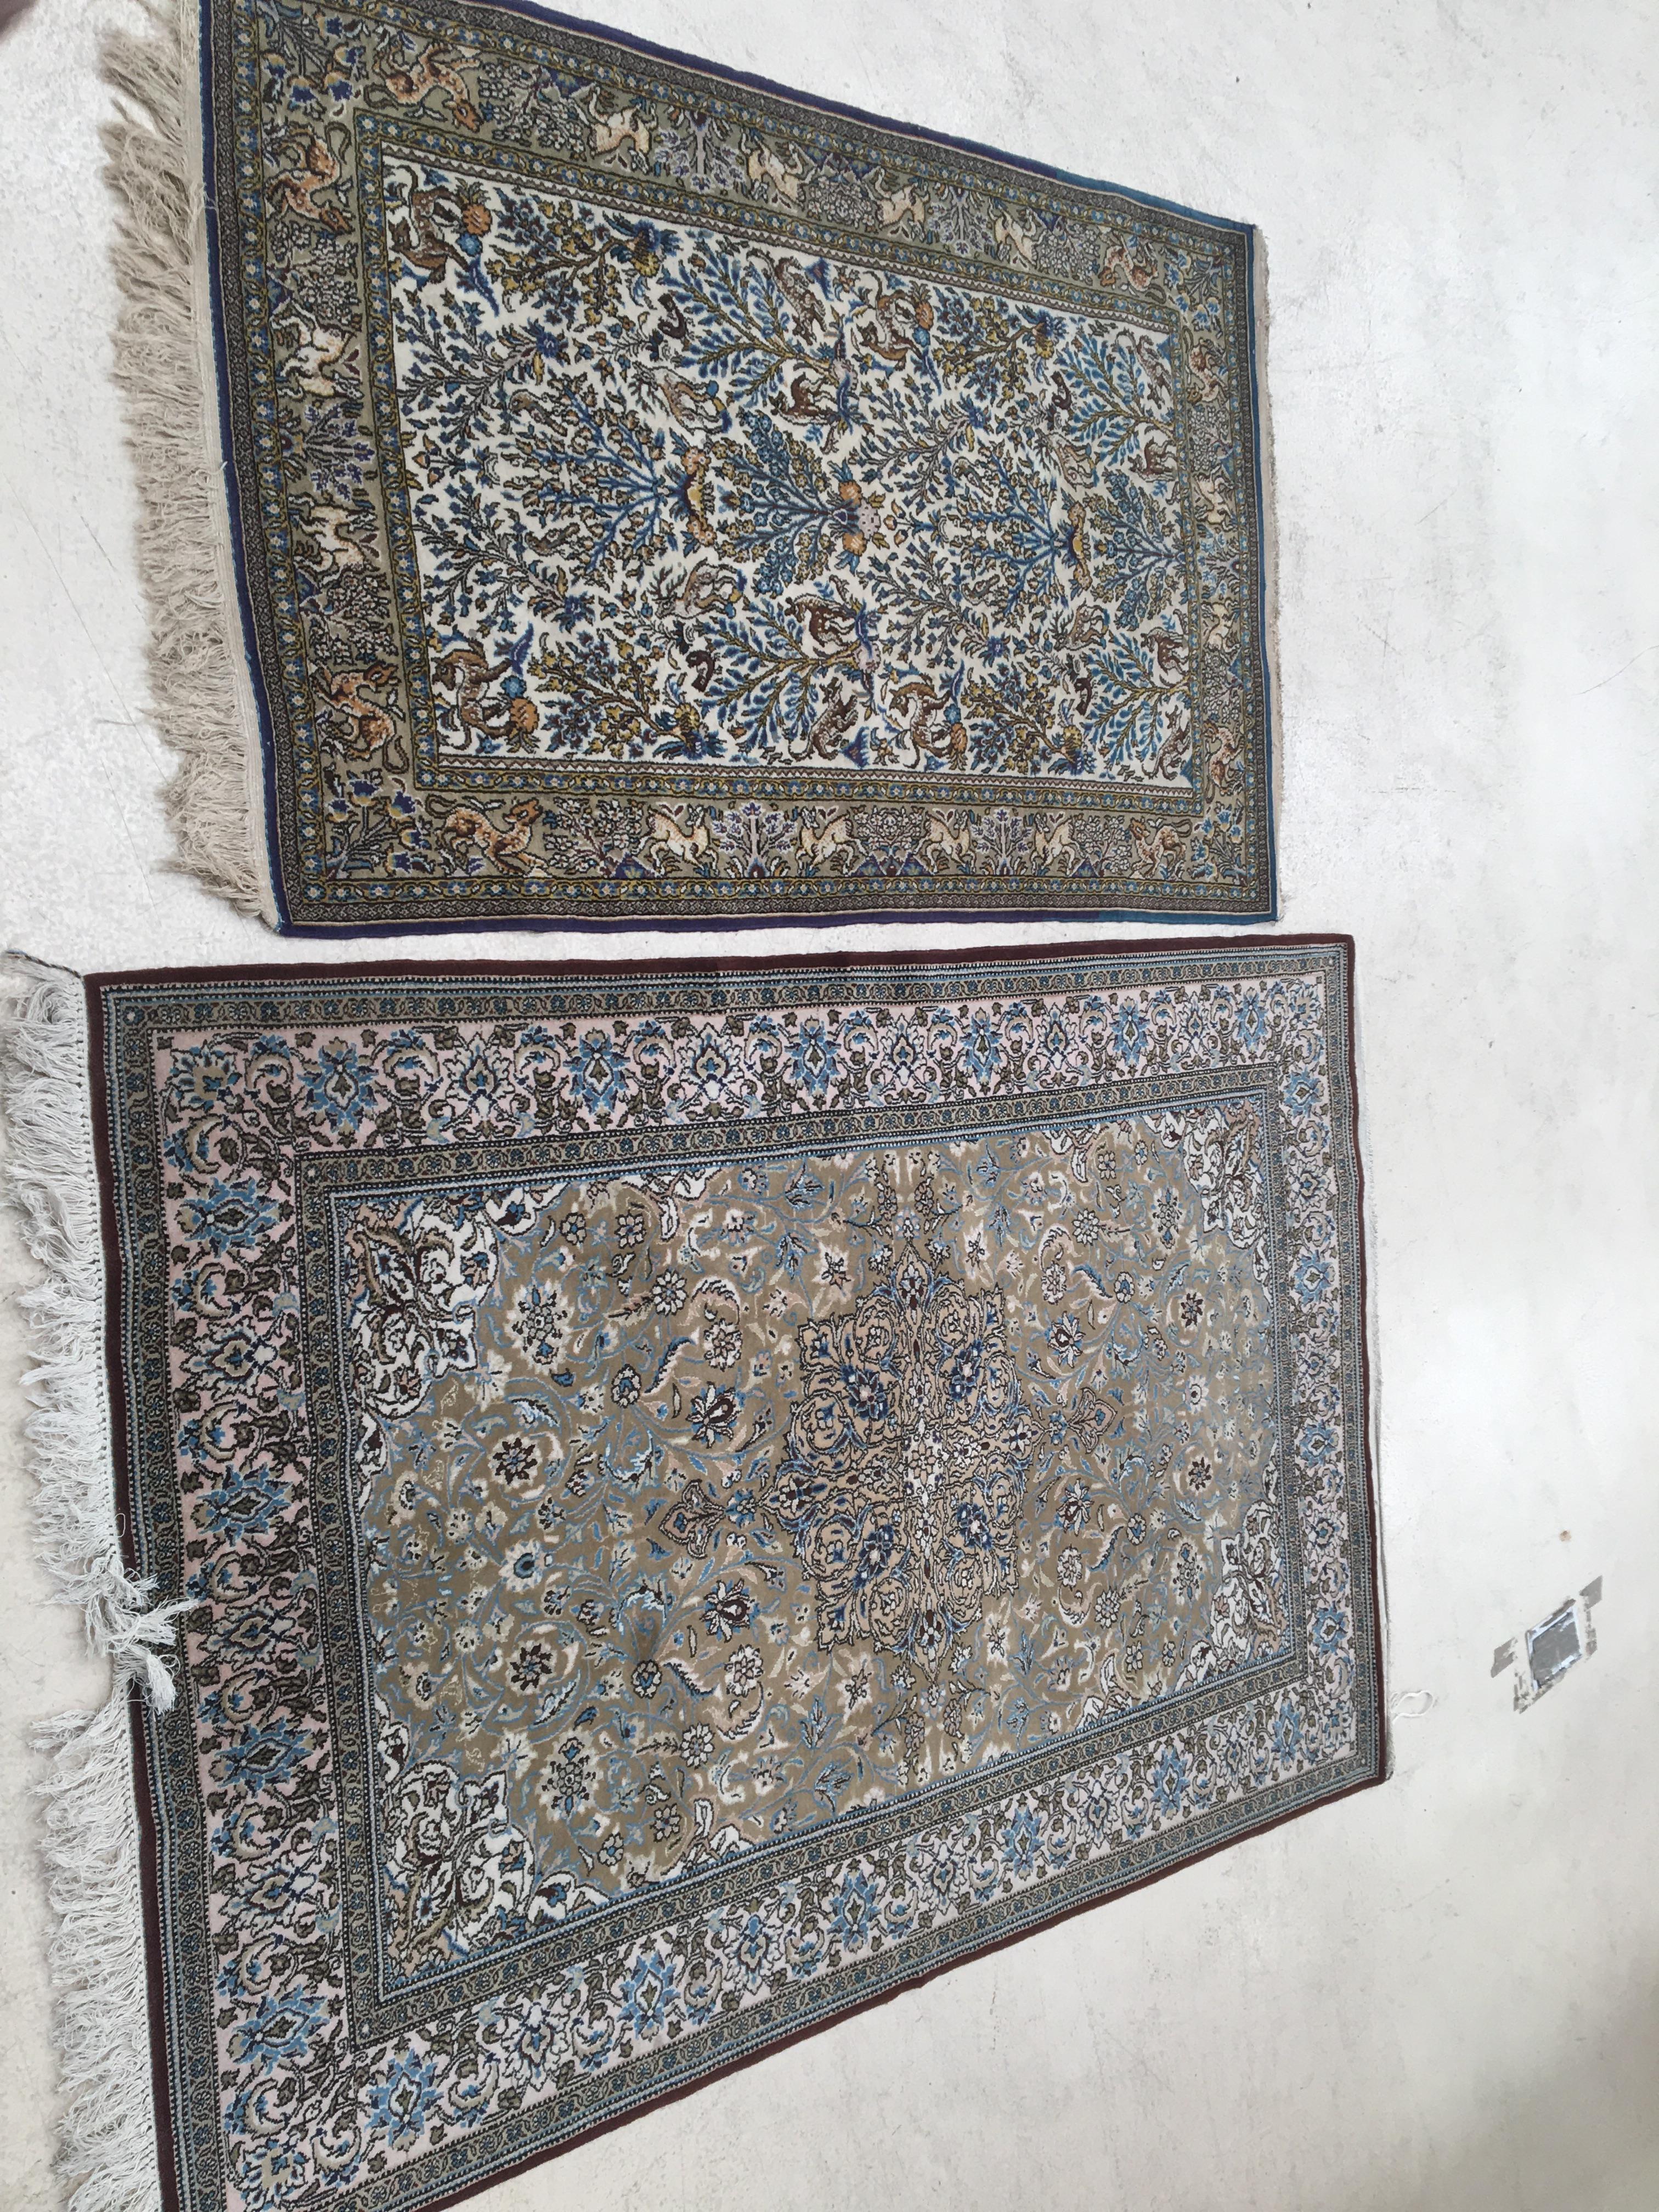 Two vintage rugs